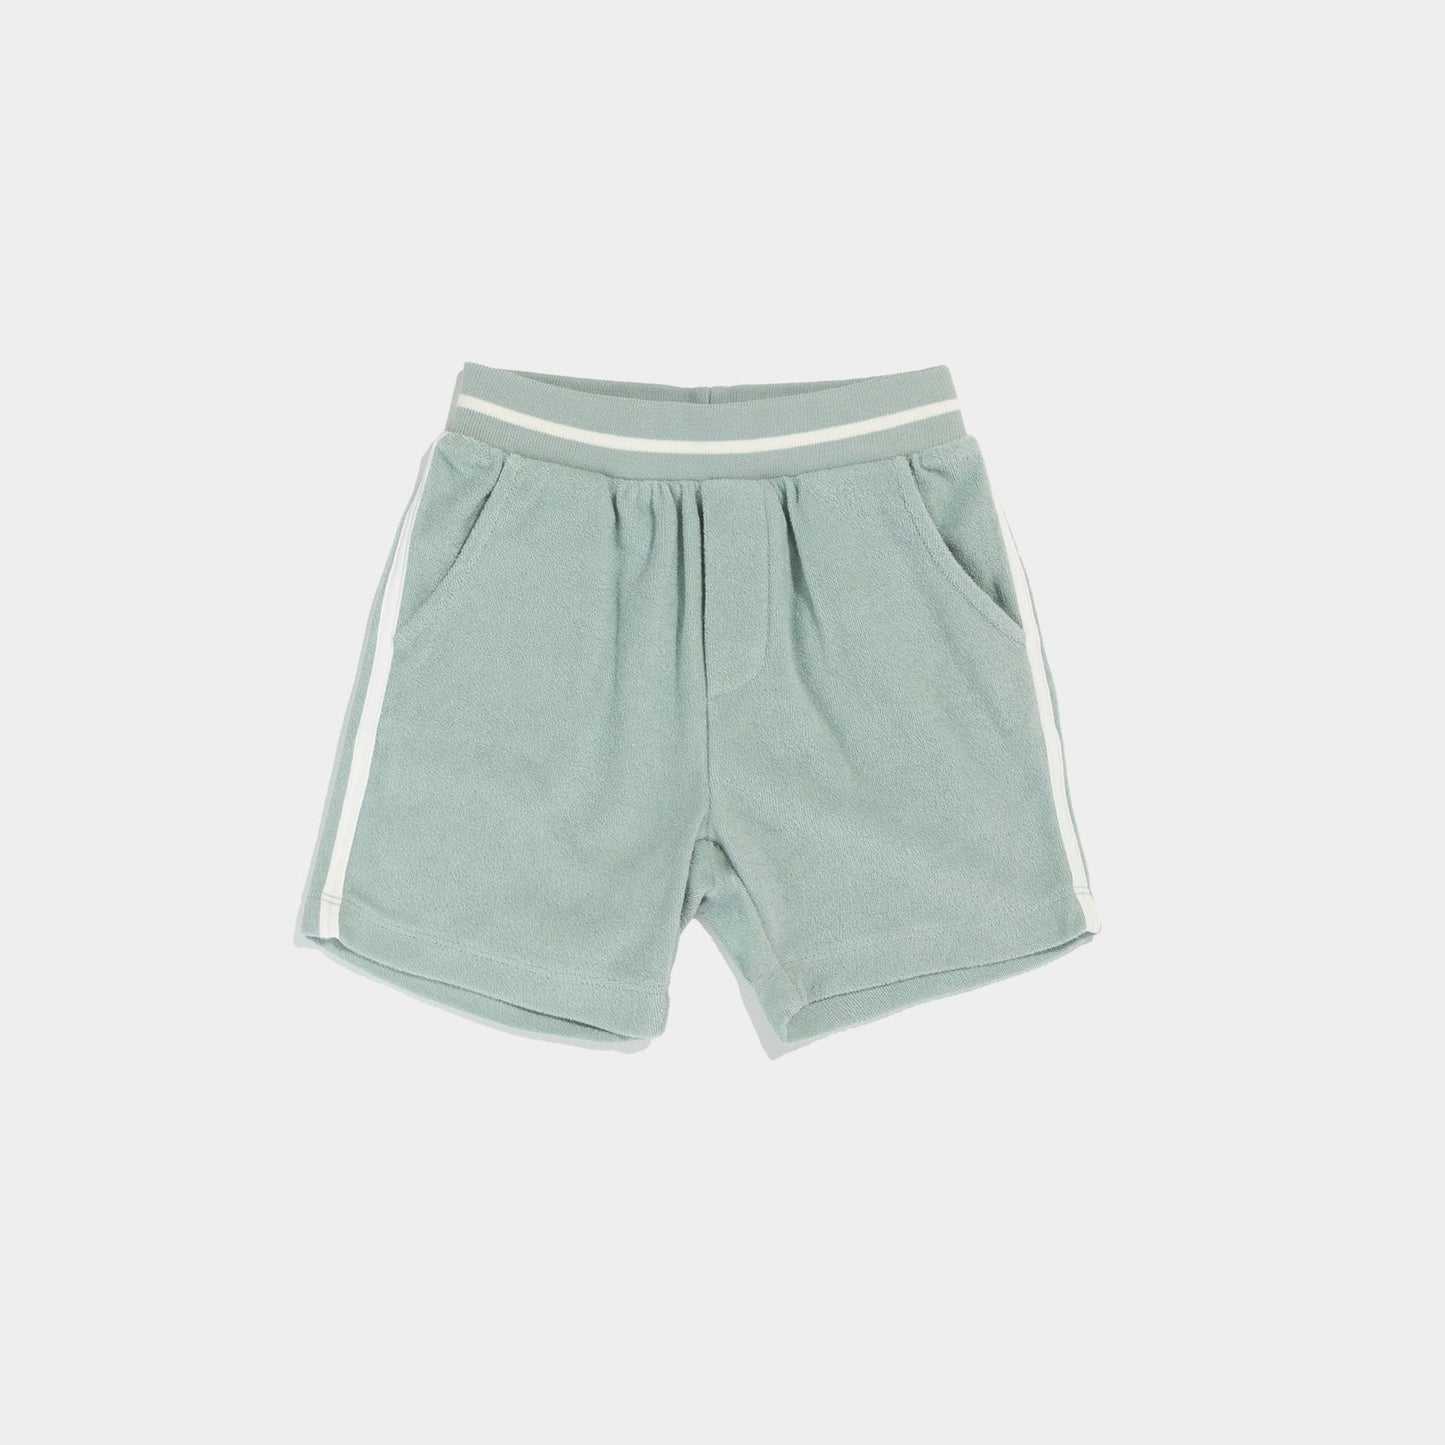 Seafoam Terry Cloth Shorts